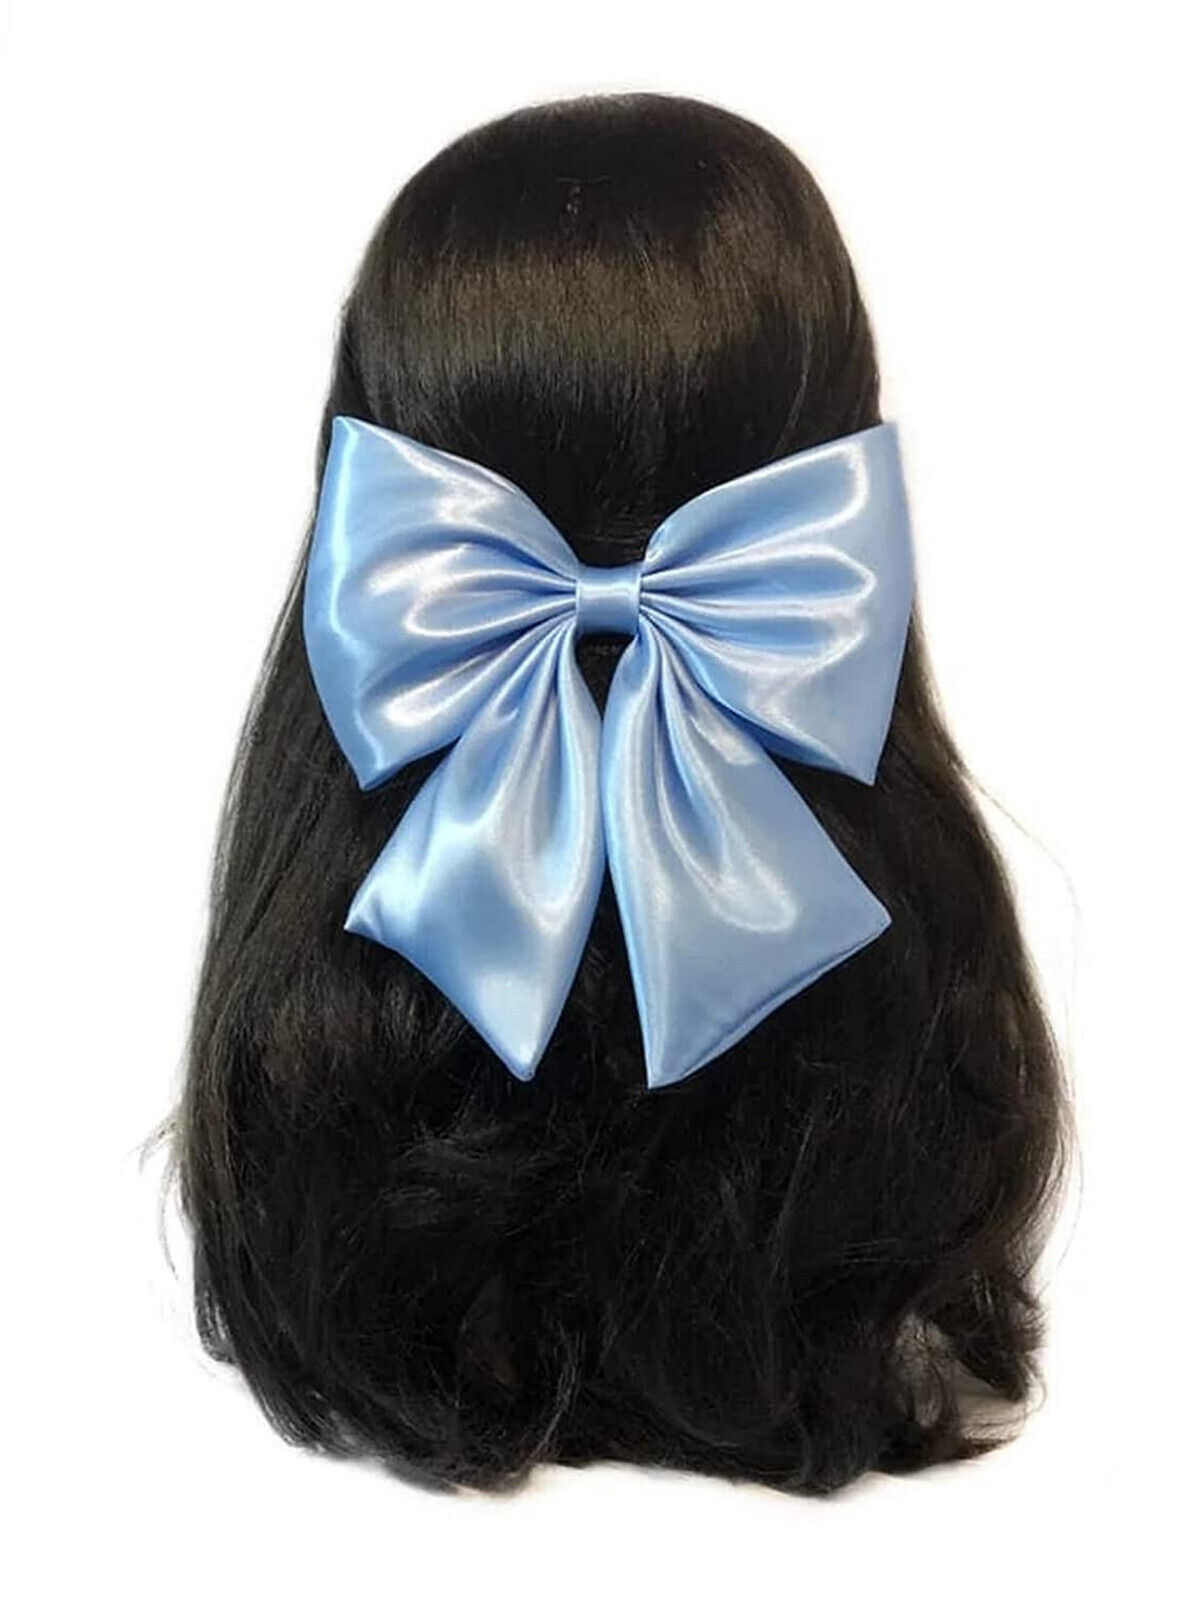 Stylish Sailor Bow Hair Clip color sky blue for Women & girls | eBay